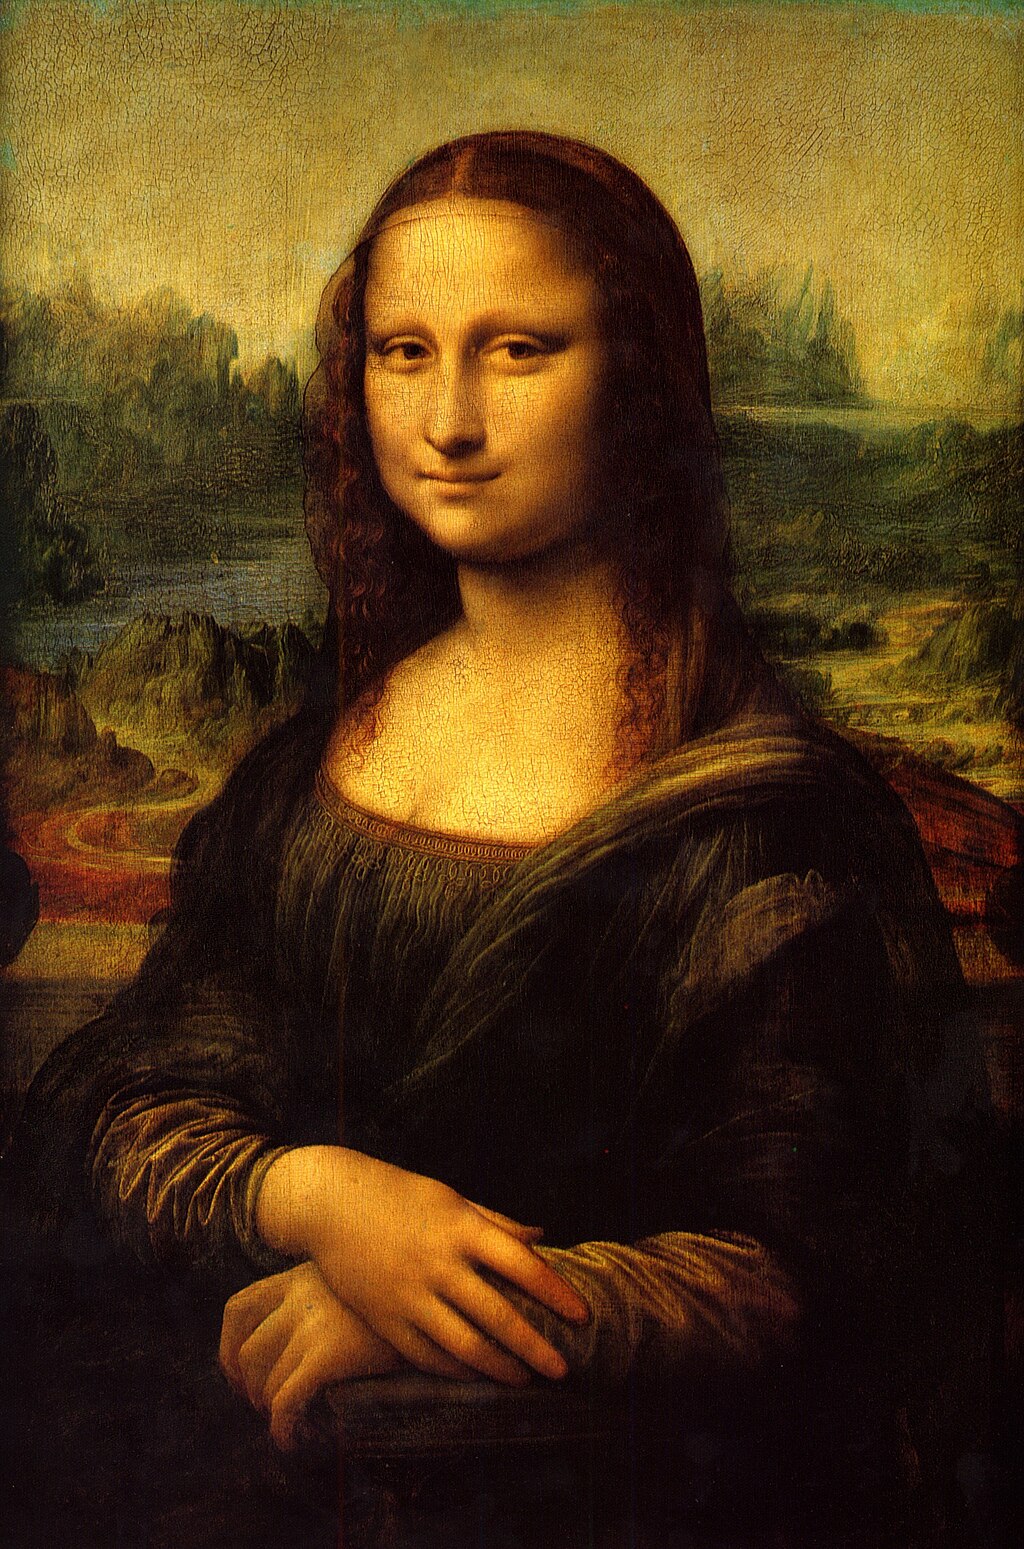 Mona Lisa Location Mystery Solved, Claims Art Historian